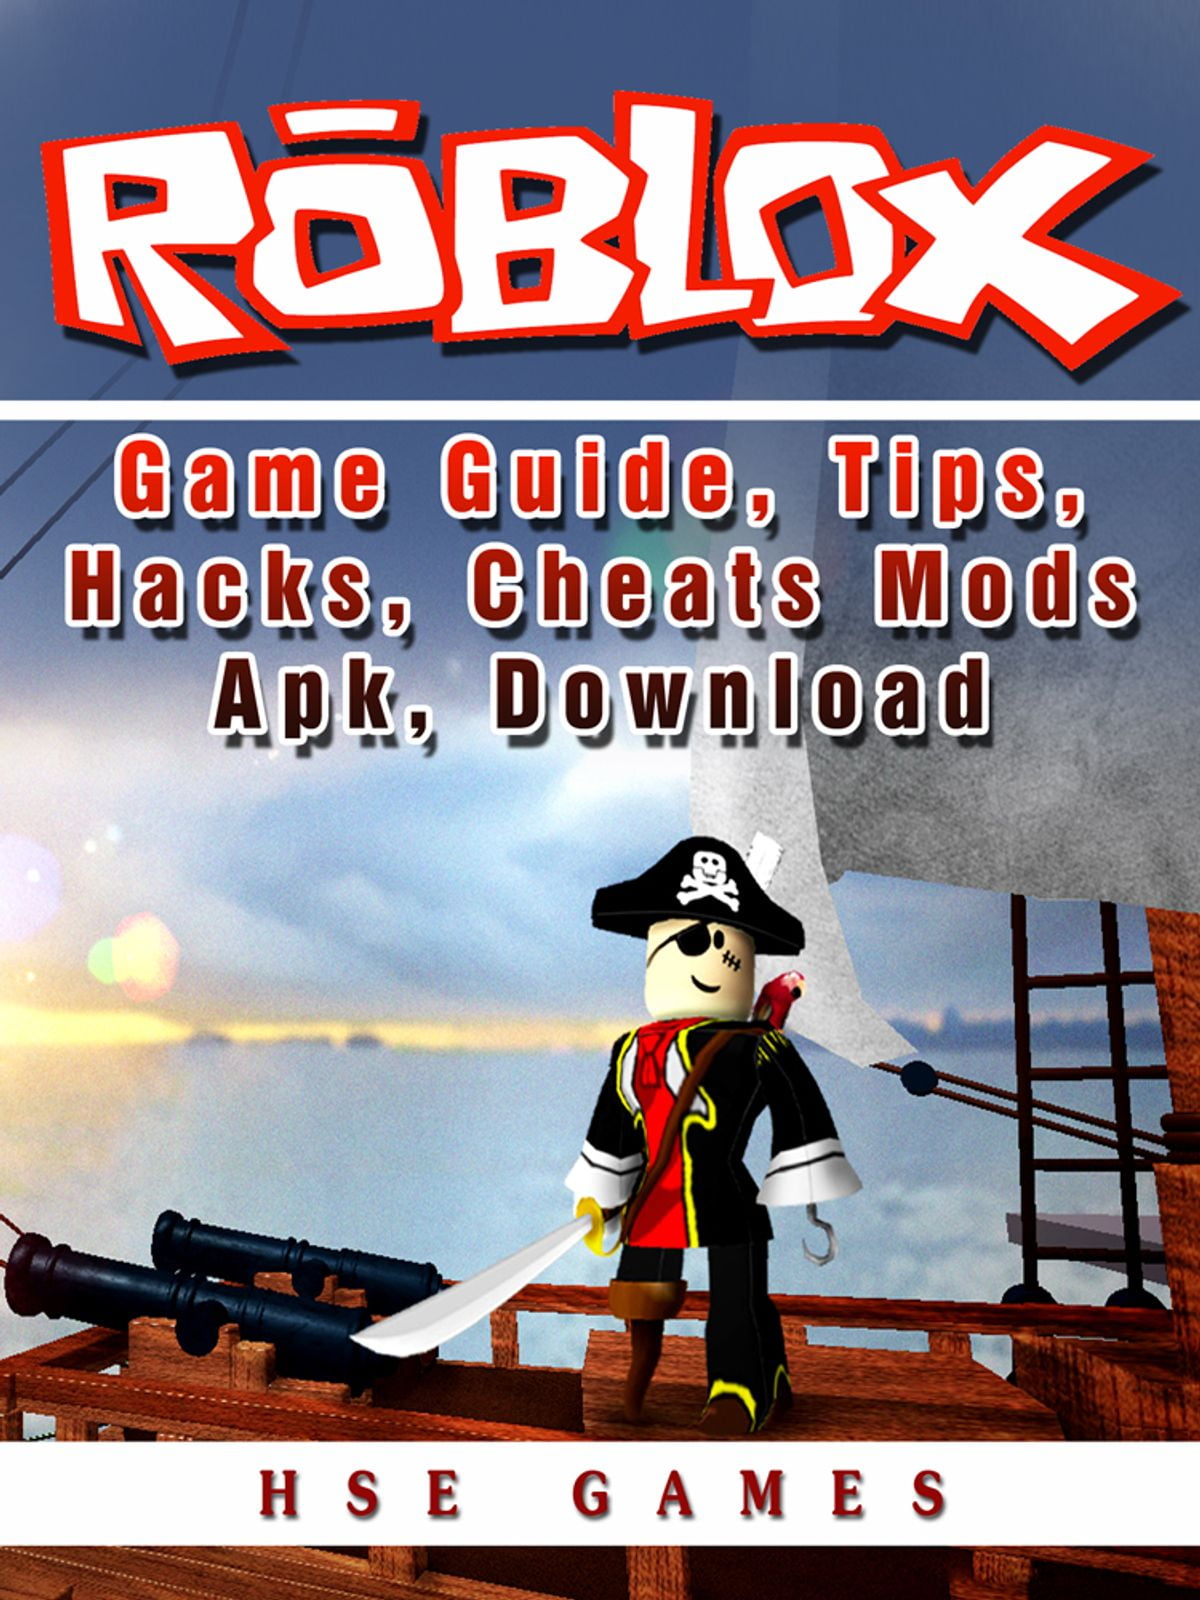 Roblox Game Guide Tips Hacks Cheats Mods Apk Download Ebook Walmart Com Walmart Com - how to hack roblox on ipad air